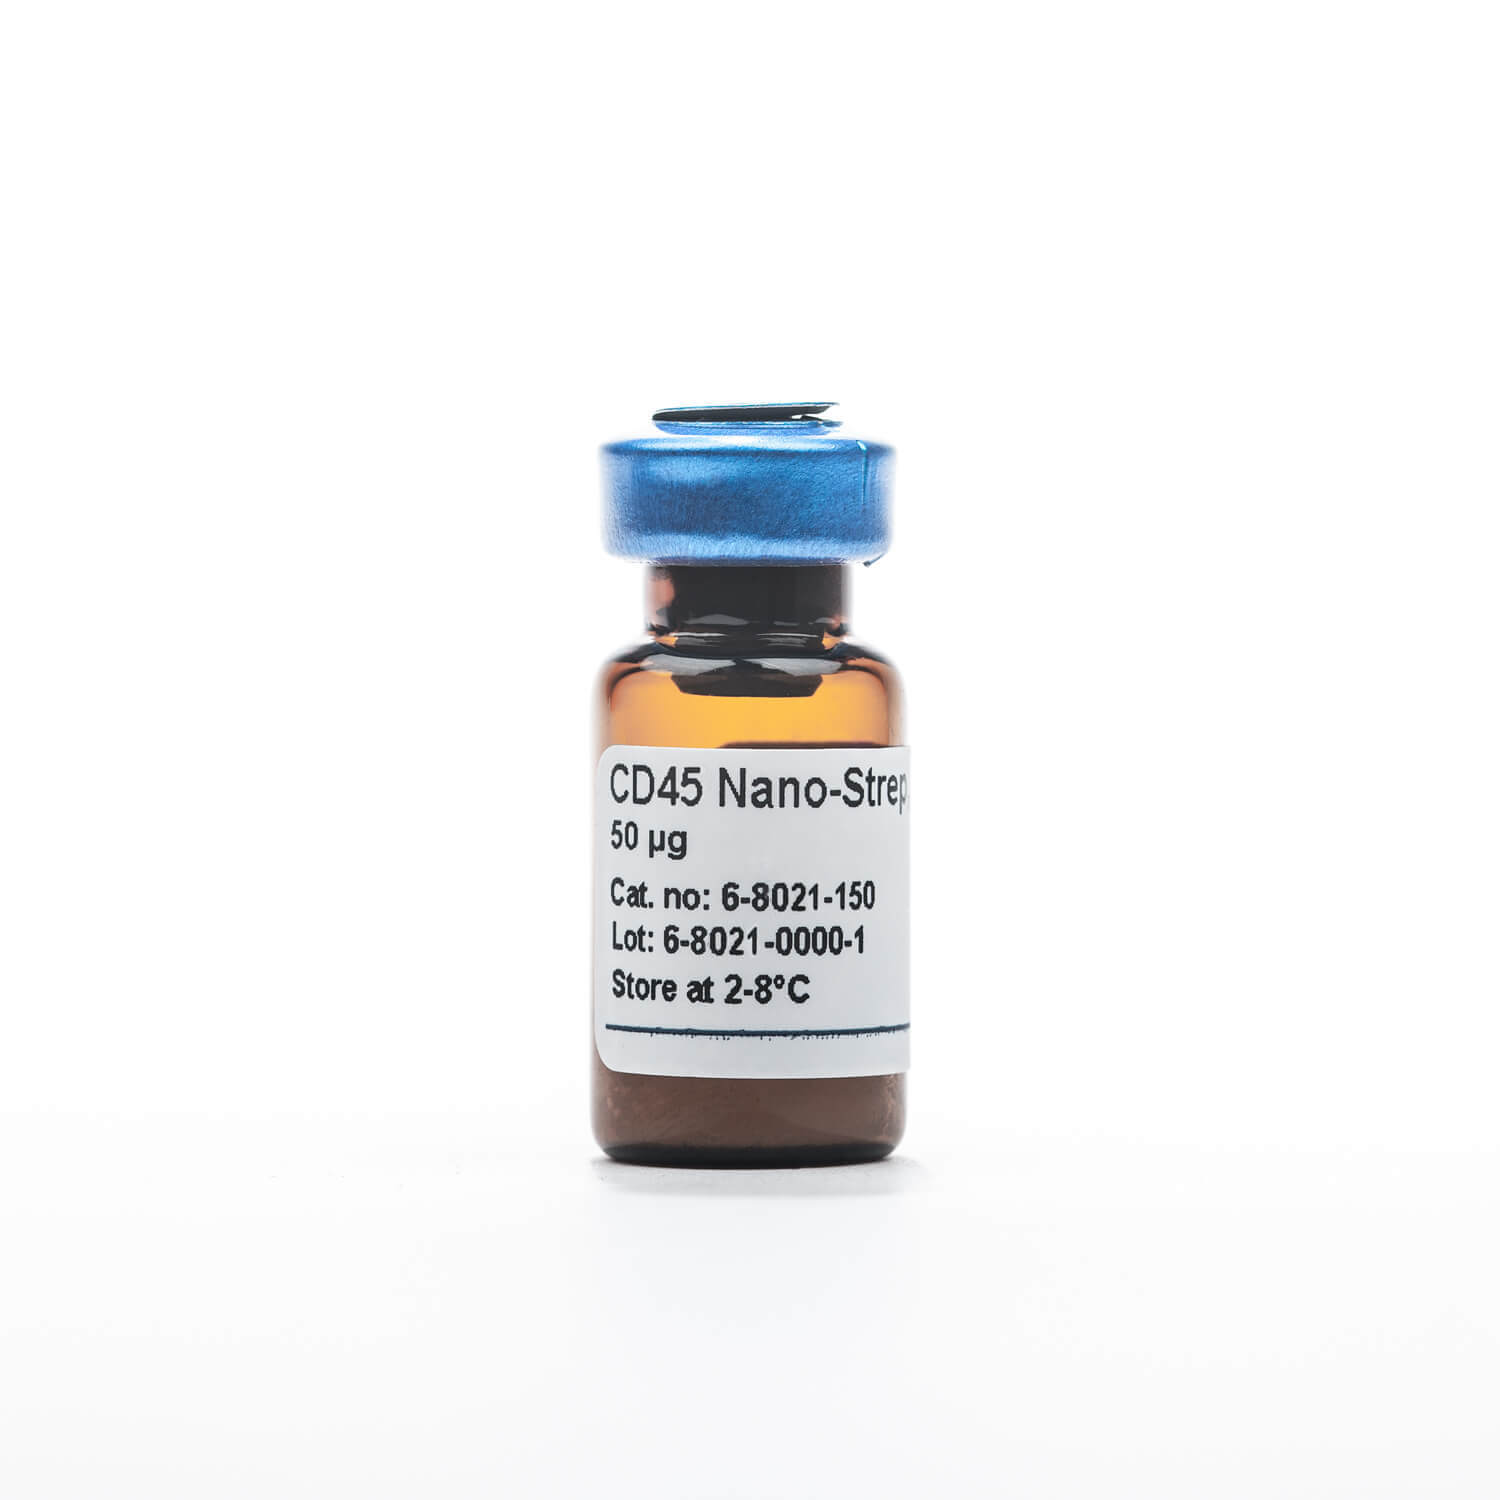 CD45 Nano-Strep, human